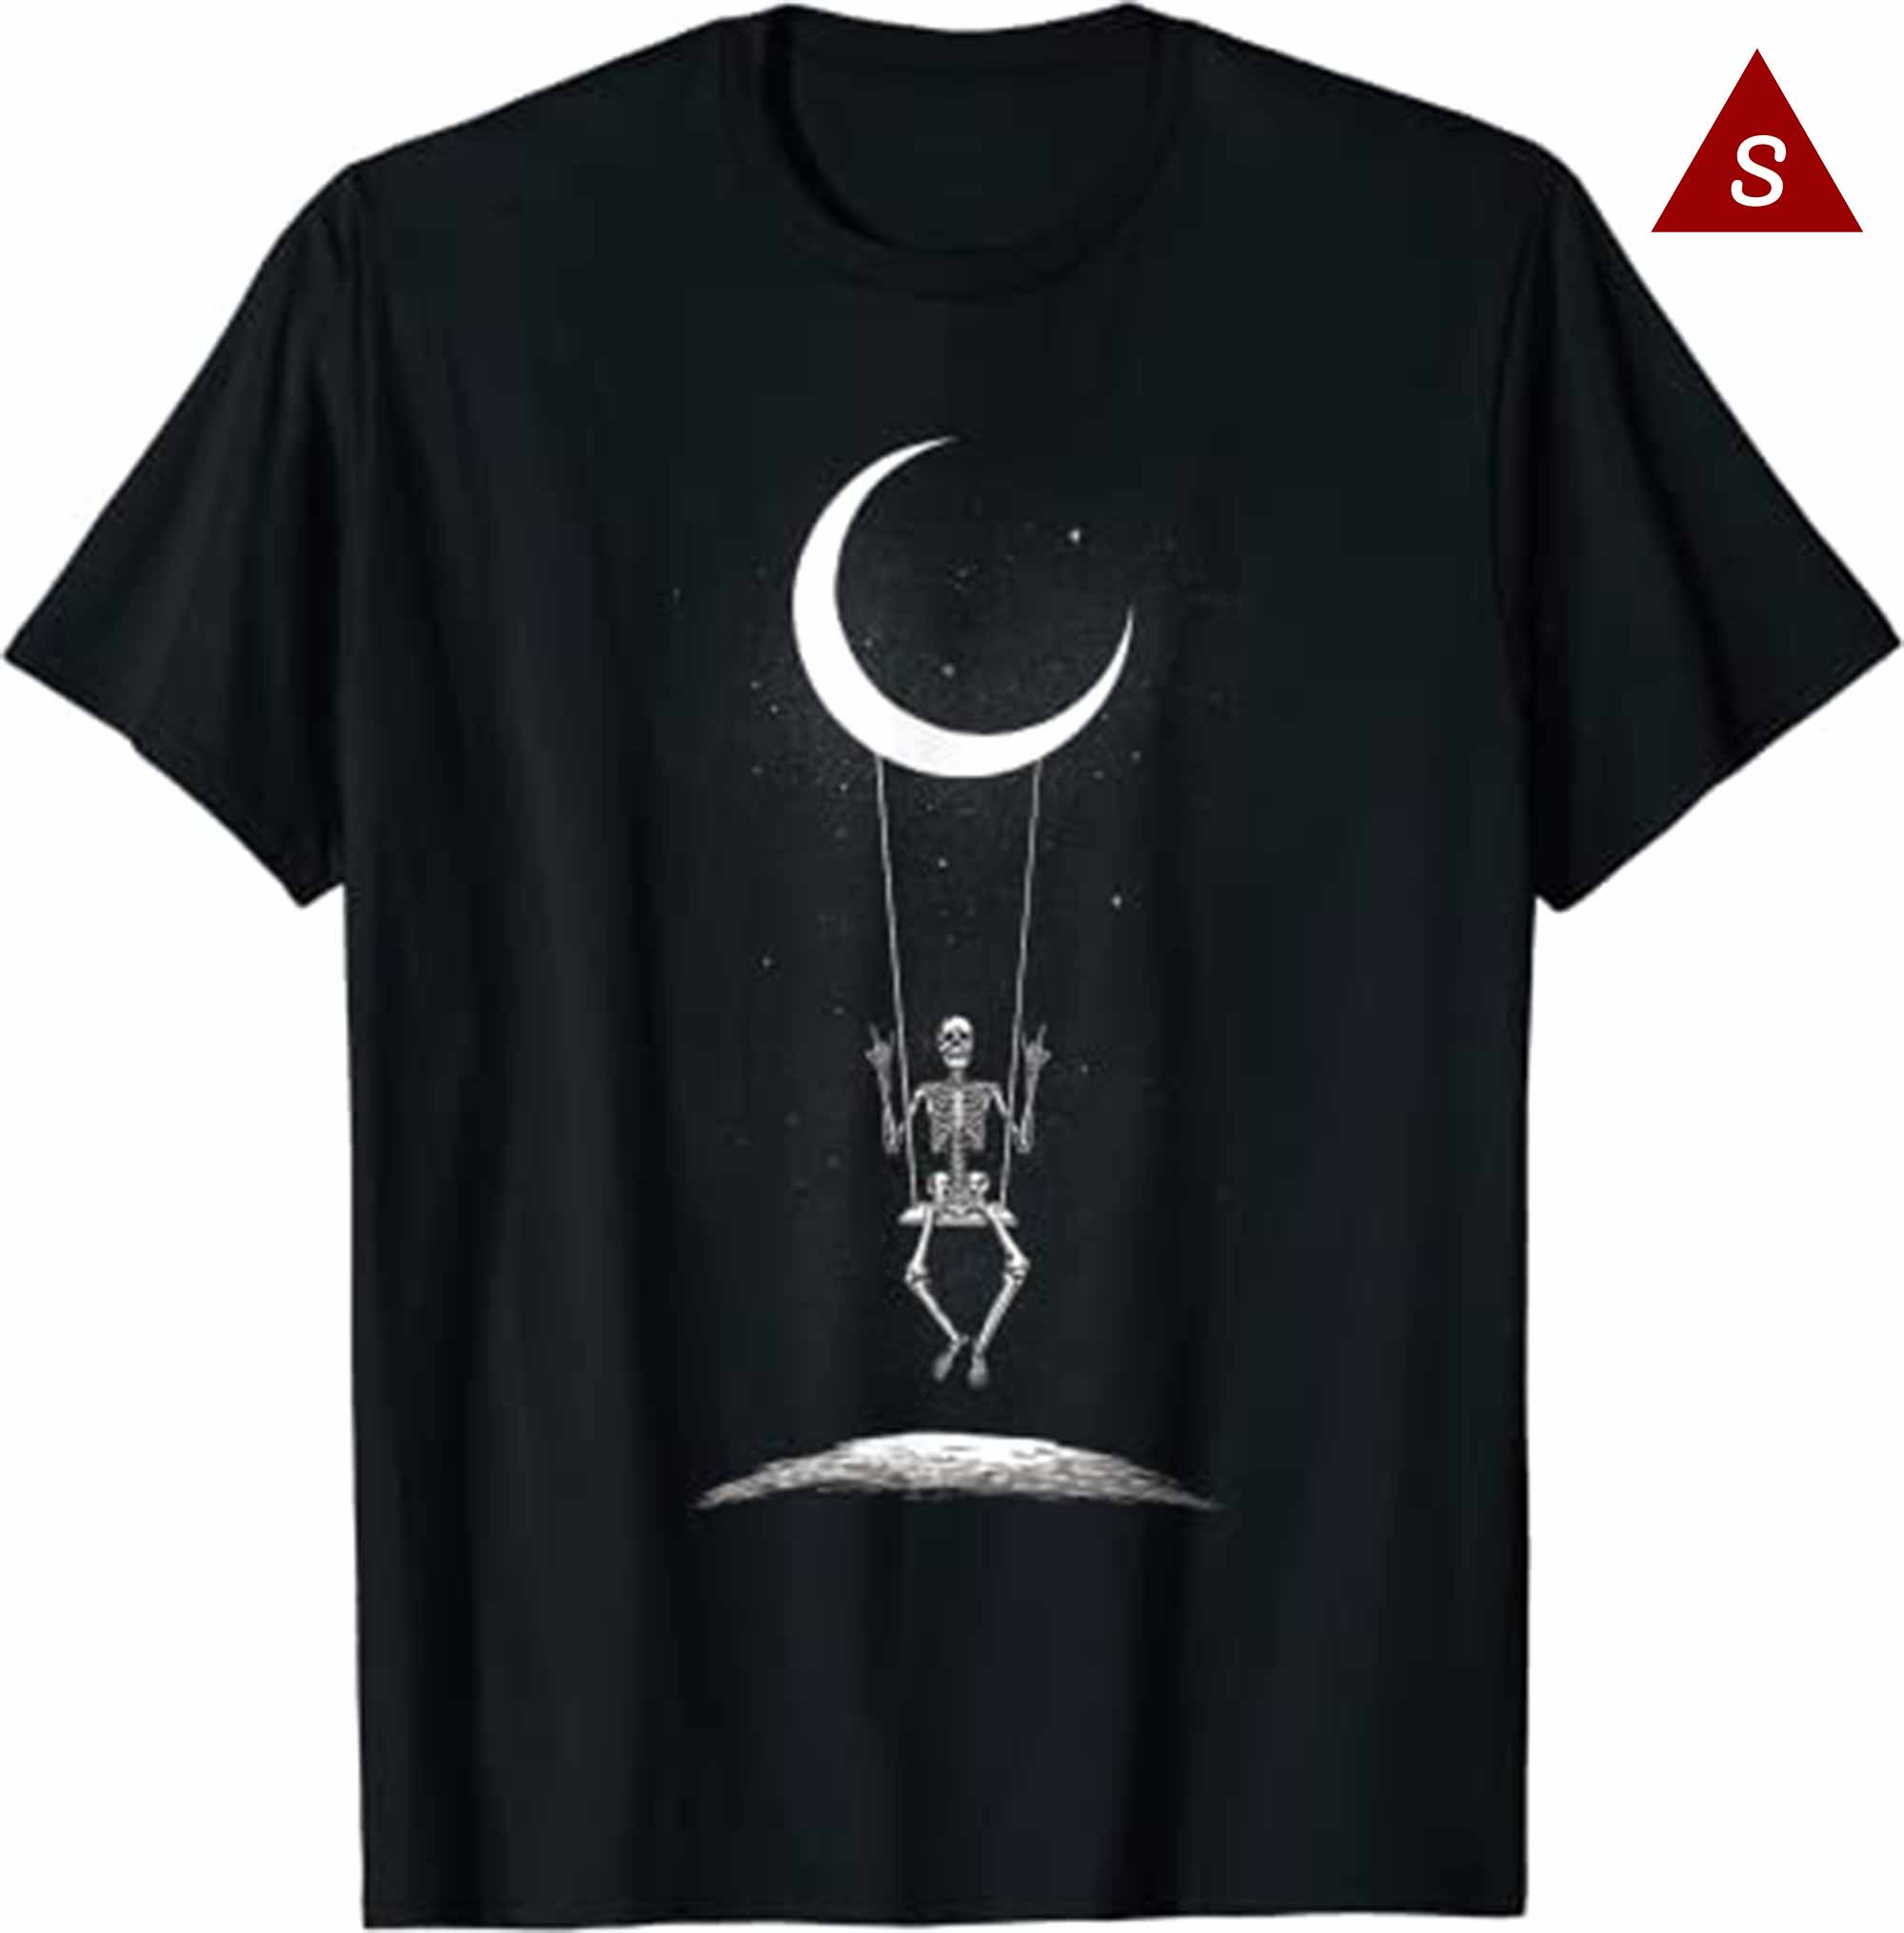 Skitongift Skeleton Rock On Moon Spooky Halloween Rock Band Concerts T Shirt